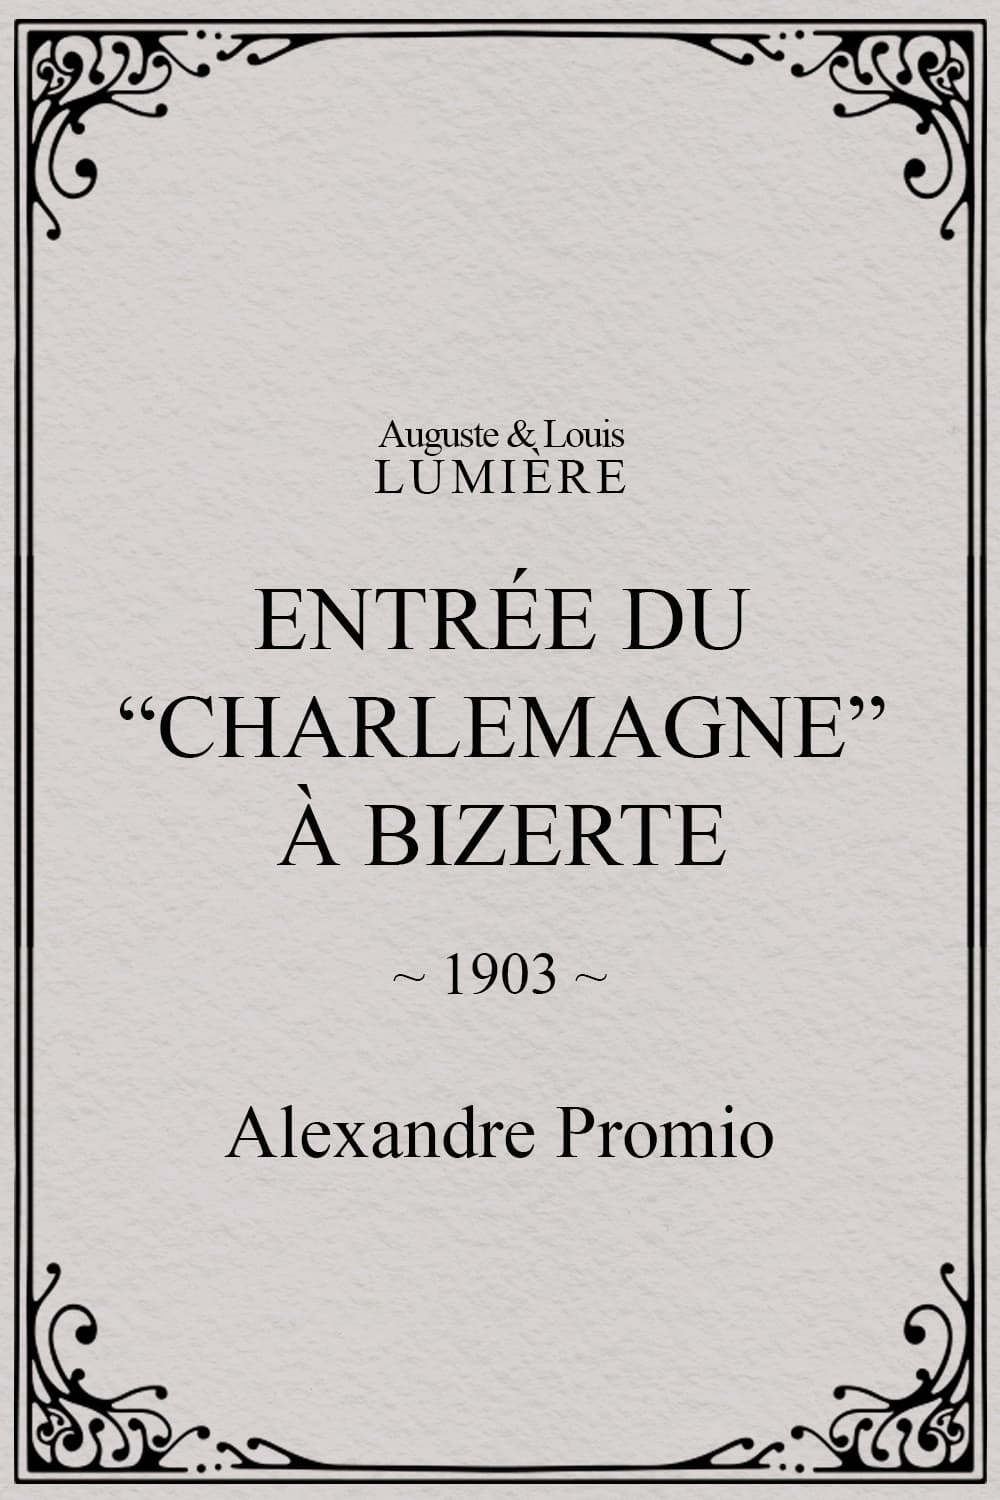 Entrée du “Charlemagne” à Bizerte (1903)